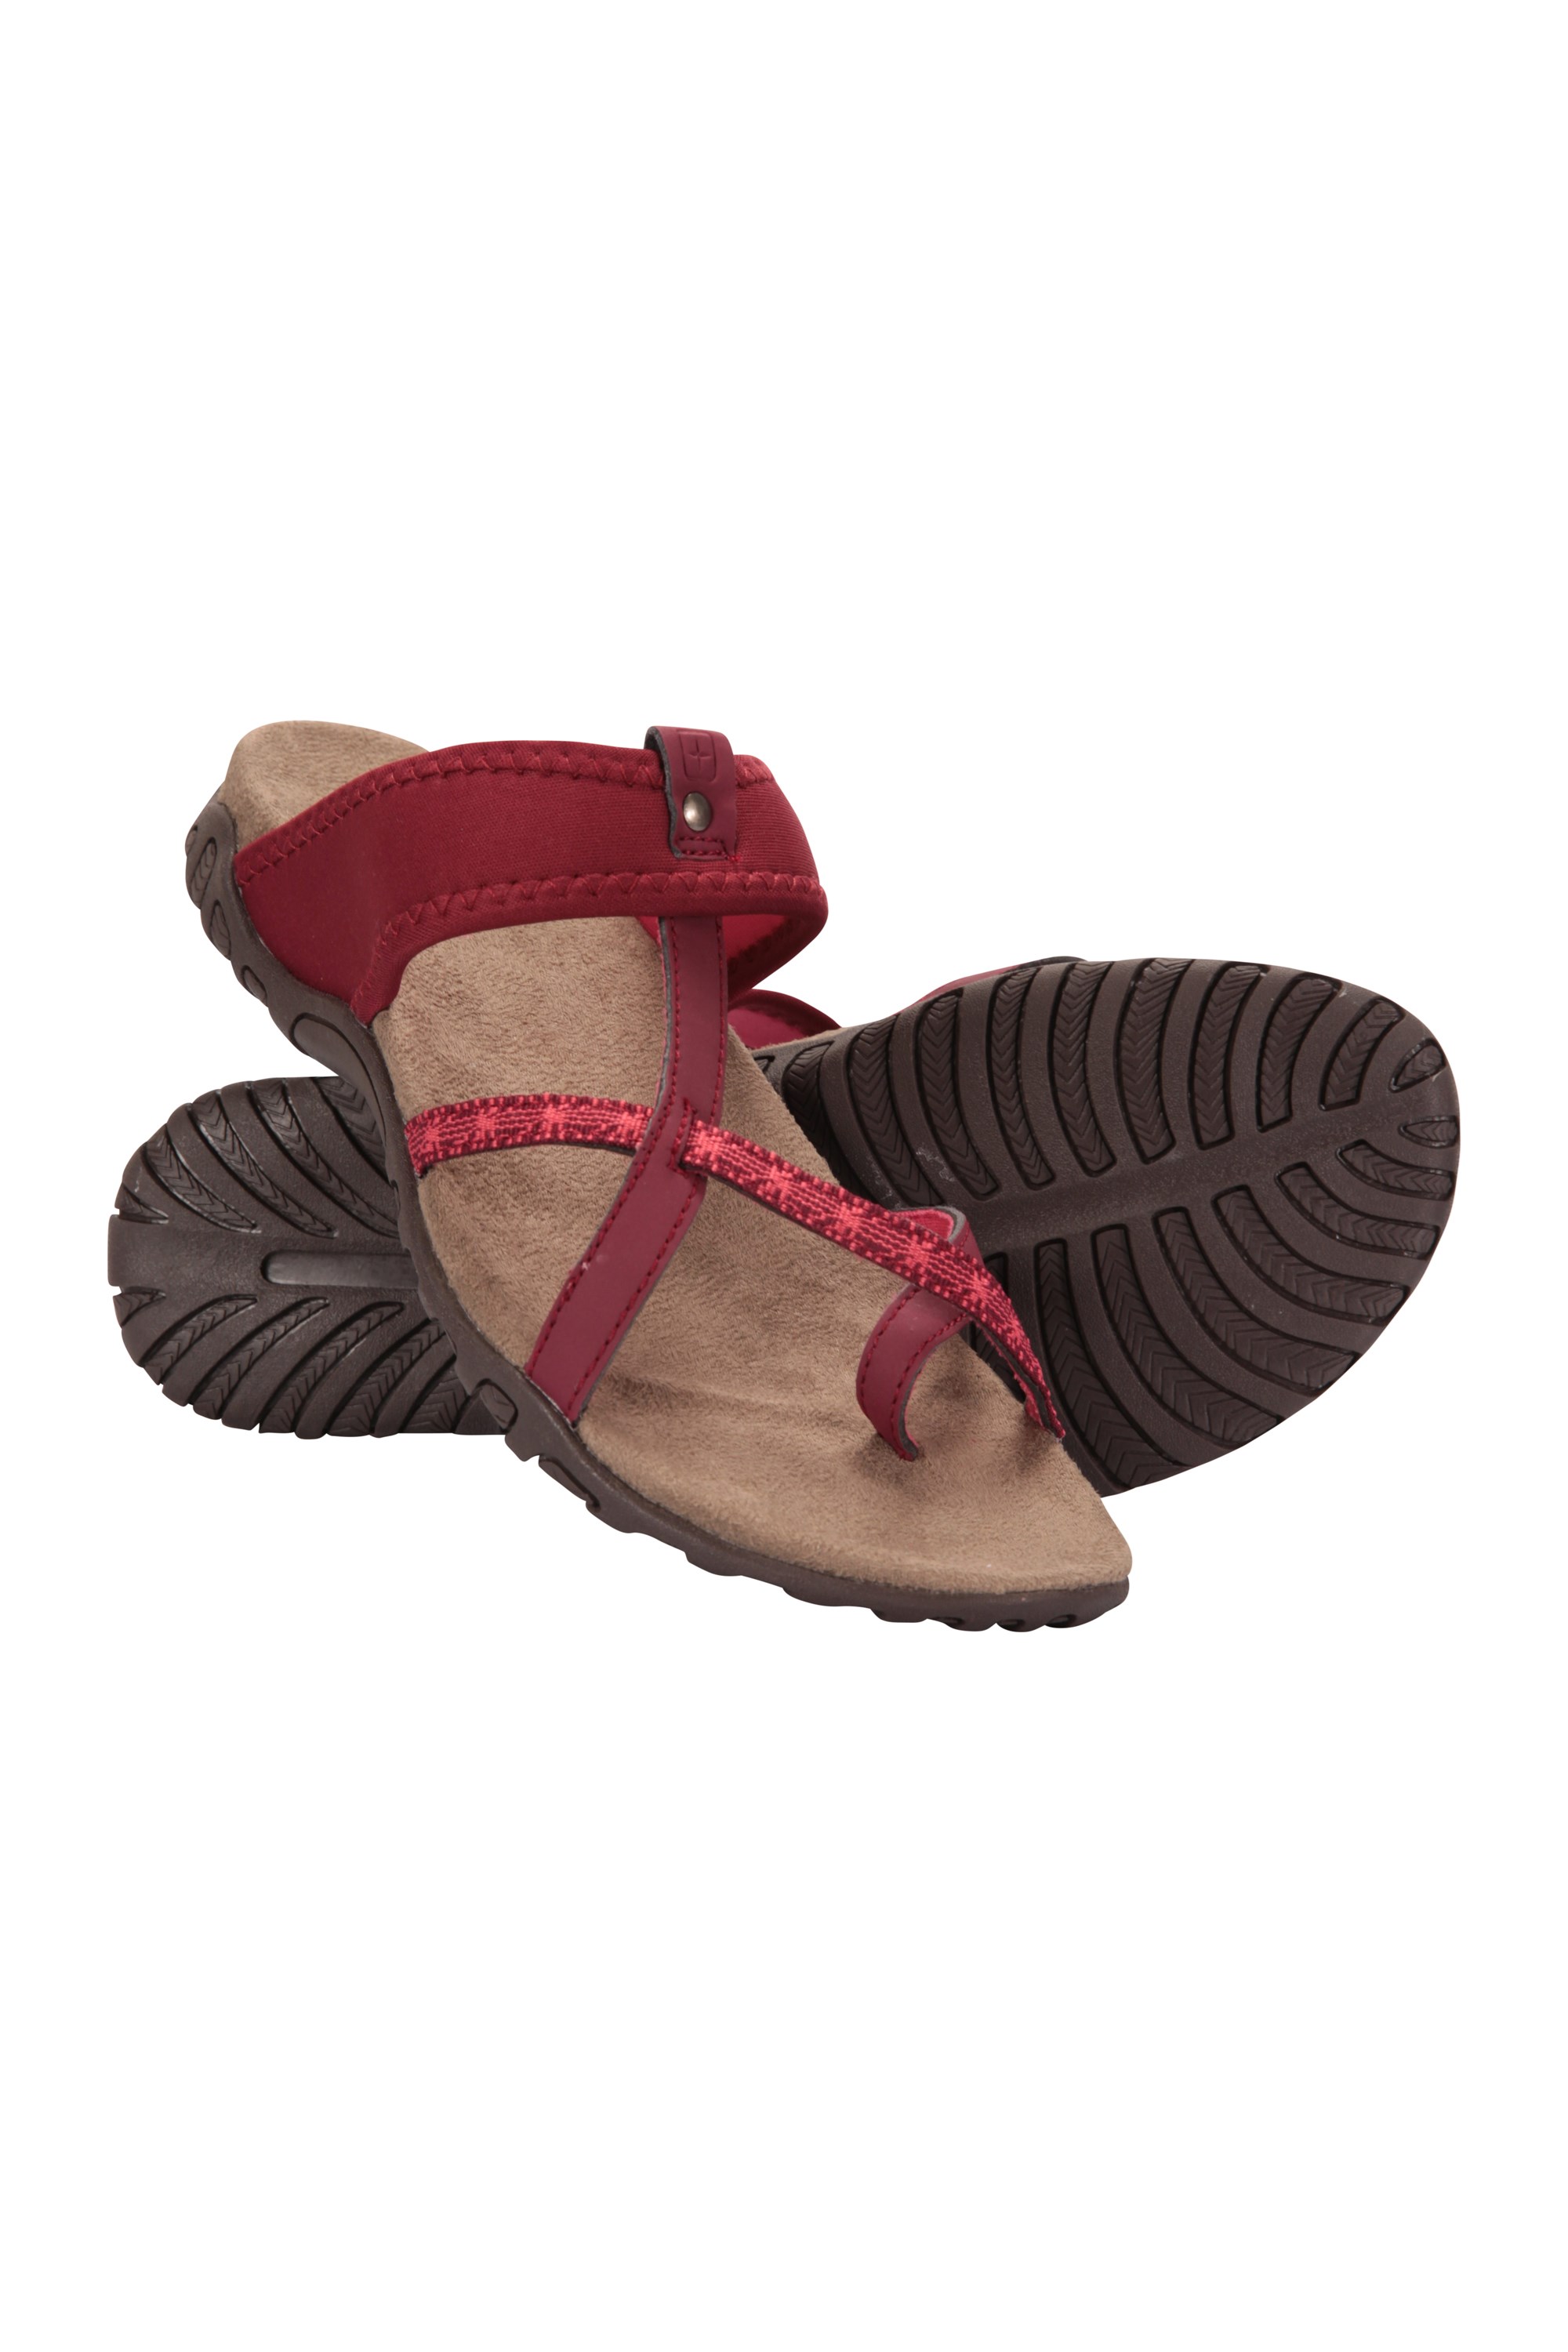 mountain warehouse womens sandals